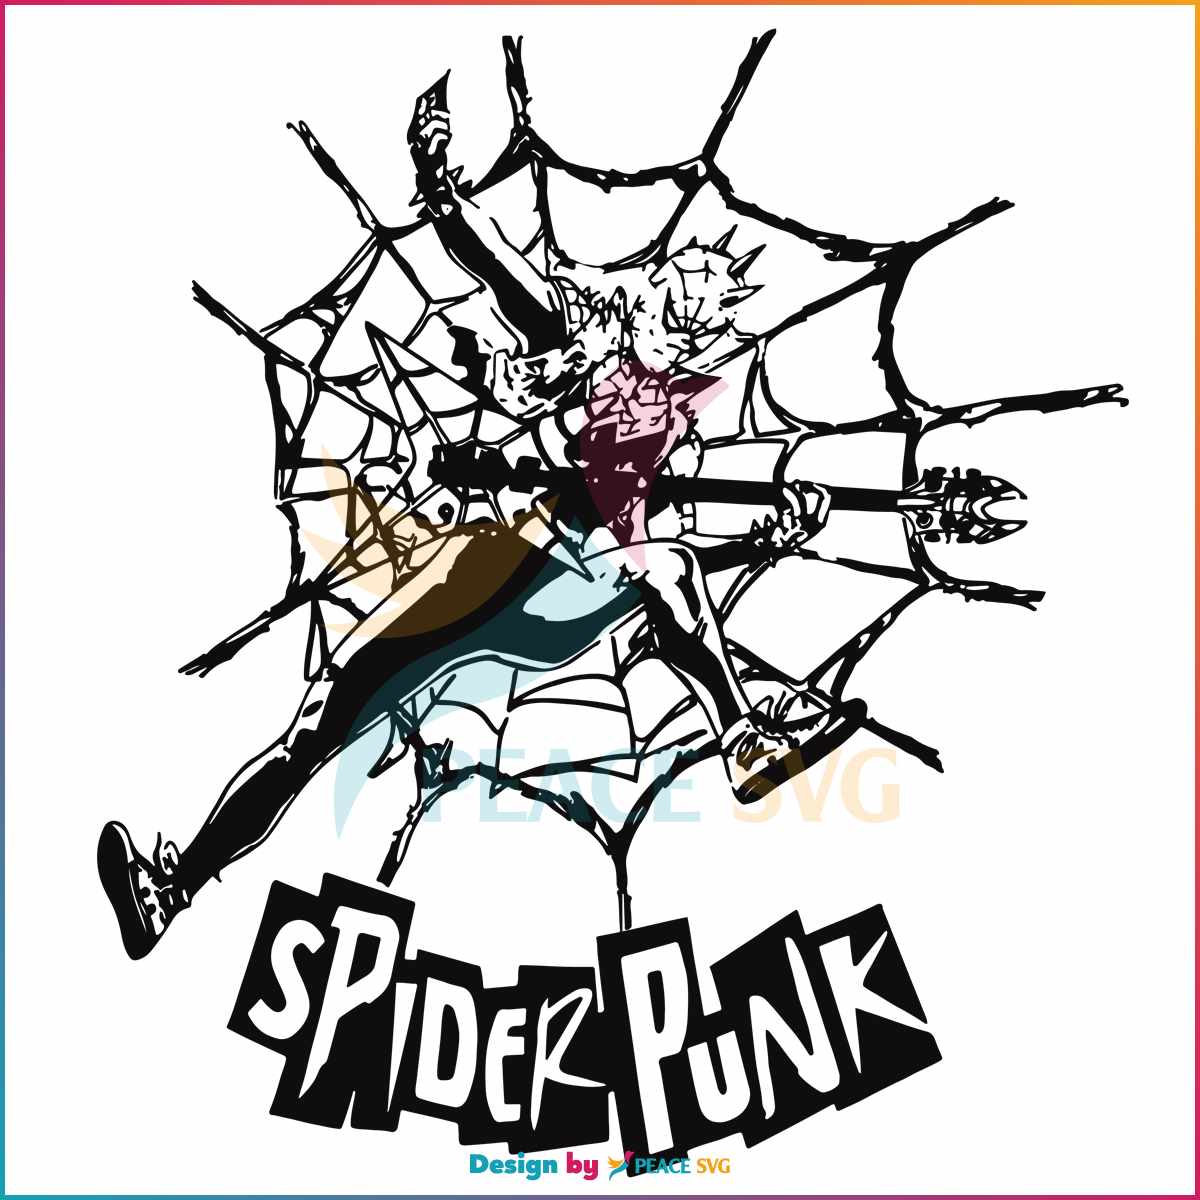 vintage-90s-the-amazing-spider-punk-svg-graphic-design-files